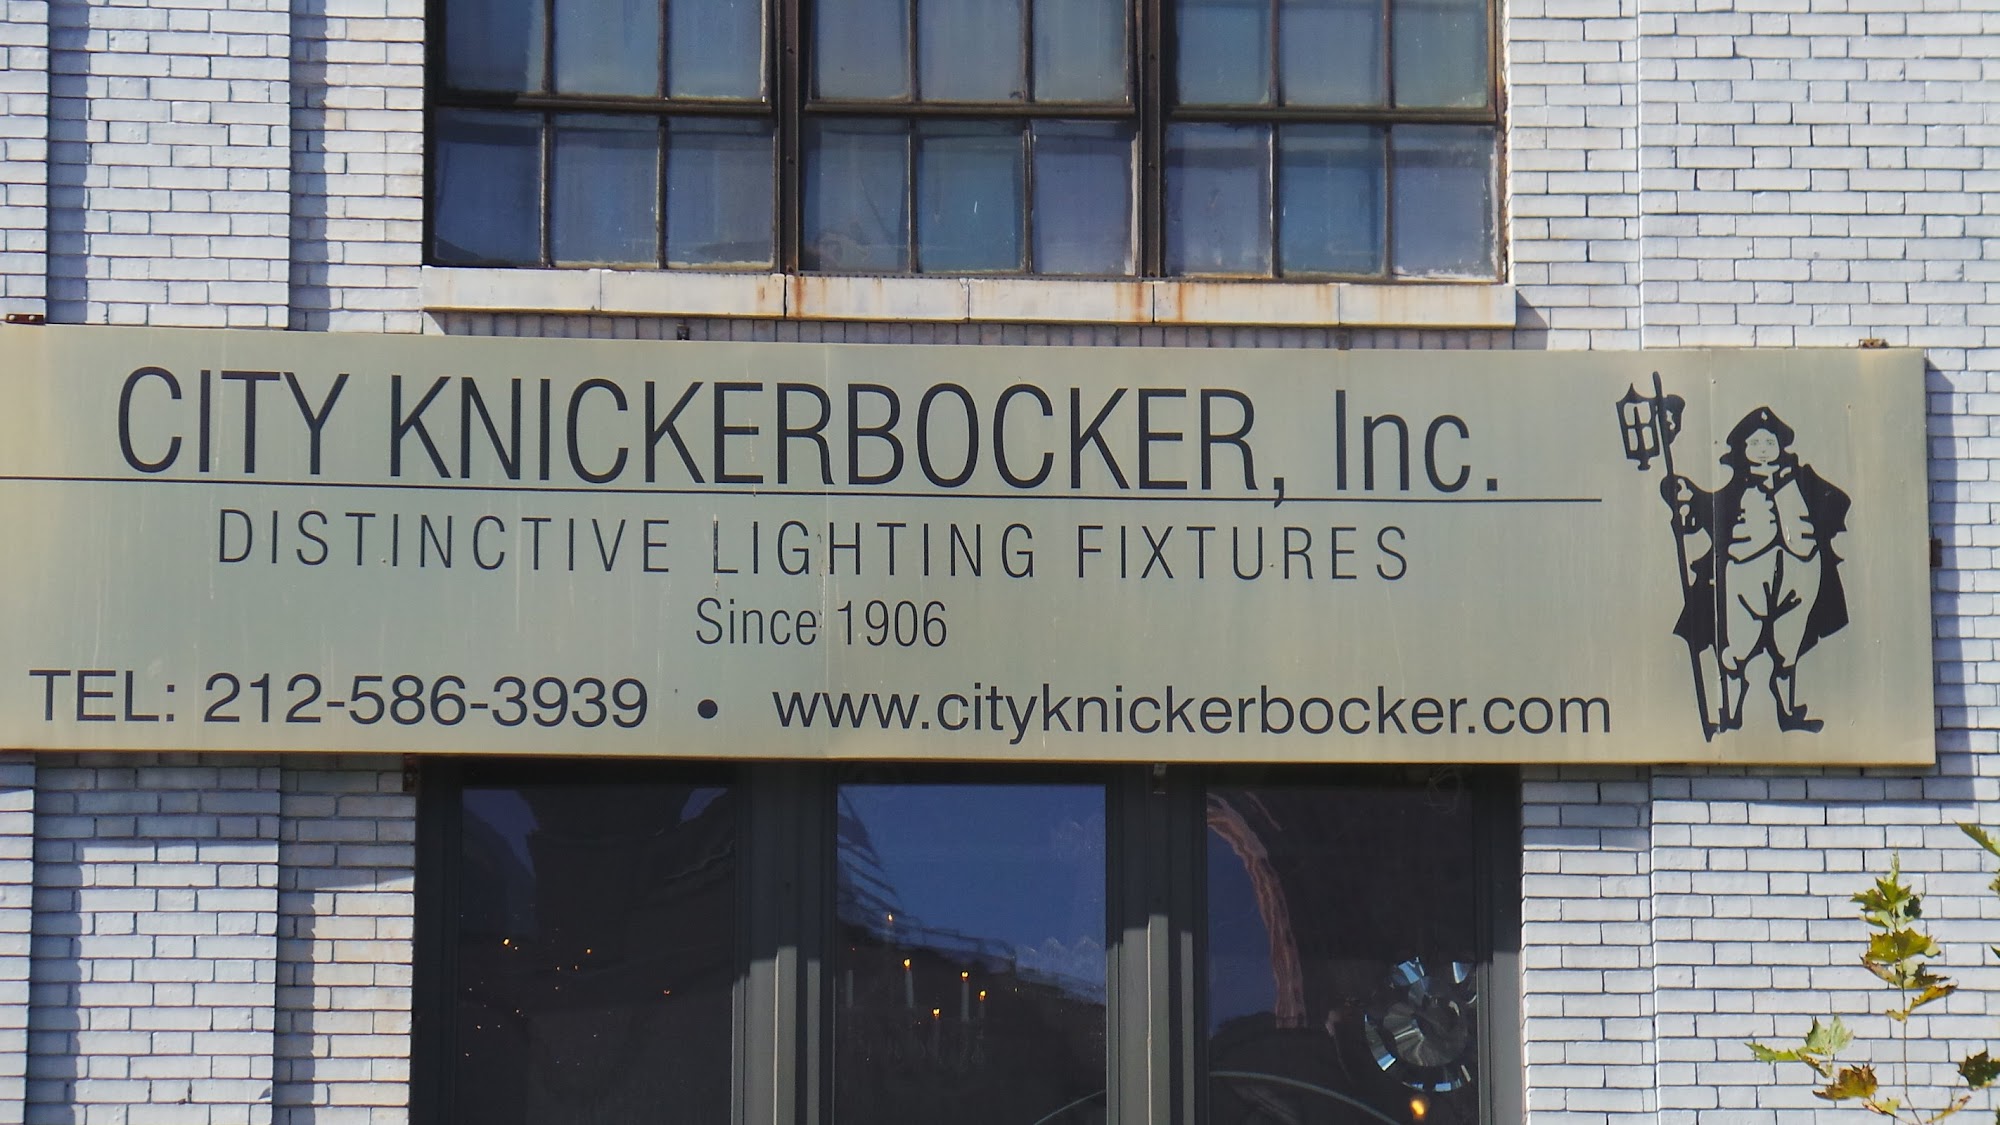 City Knickerbocker, Inc. 143 Leuning St, South Hackensack New Jersey 07606